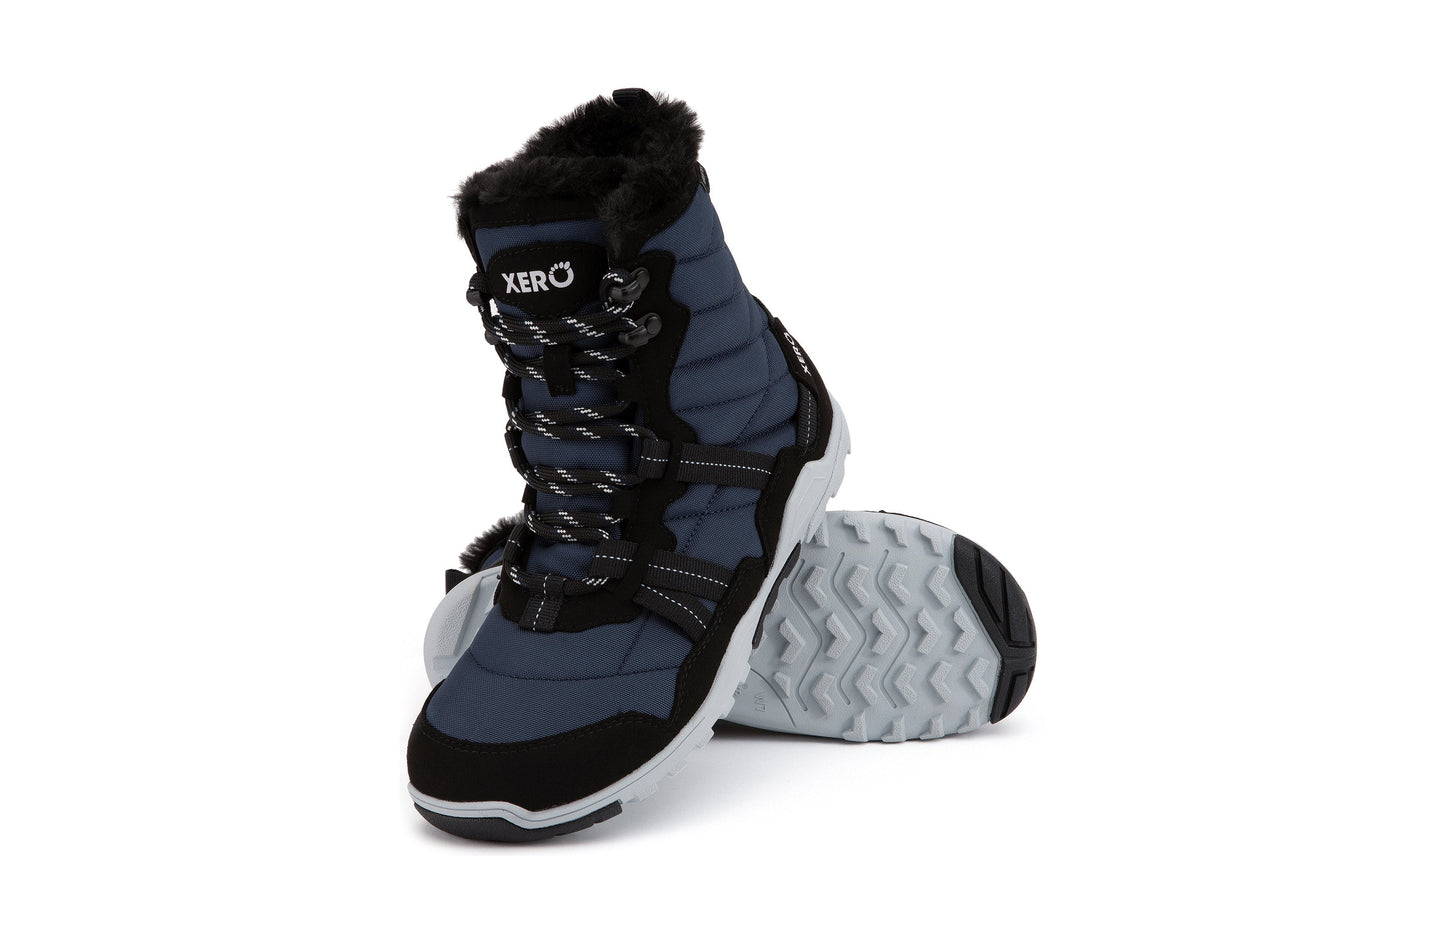 Xero Shoes Alpine Womens barfods vinterstøvler til kvinder i farven navy / black, par